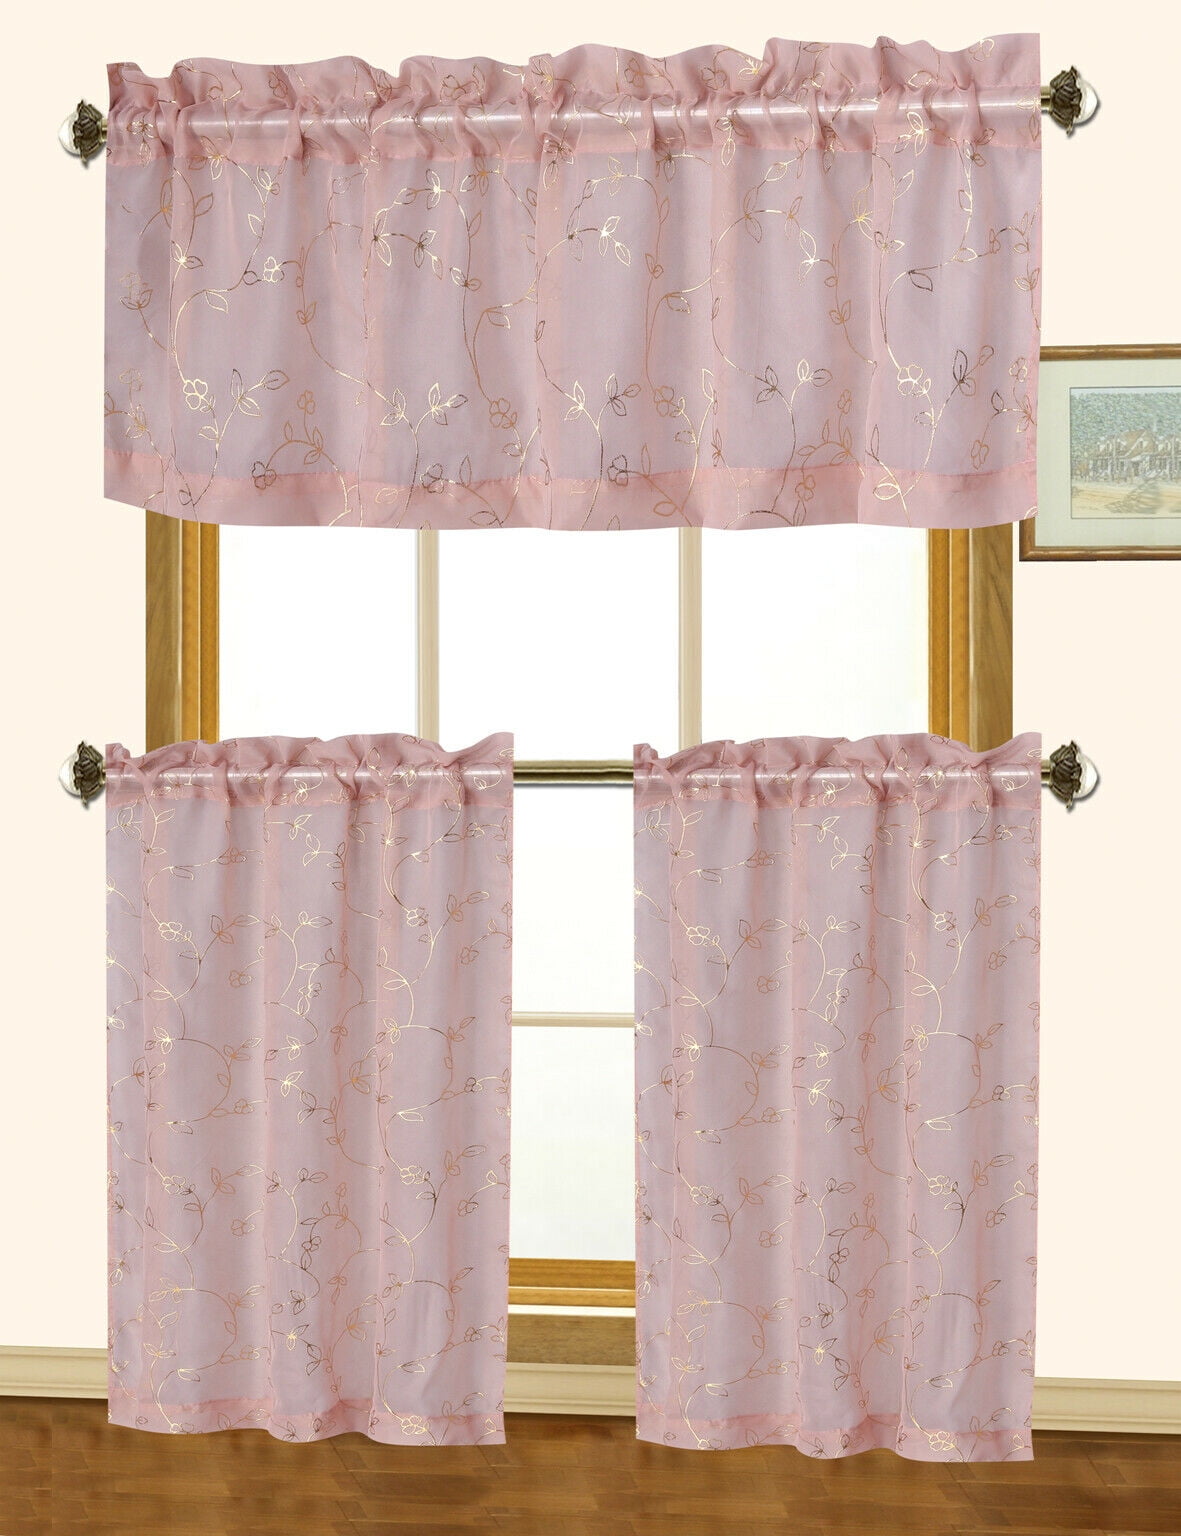 MODERN PRINCESS 3pcs lace kitchen curtain set DARK ROSE color. 